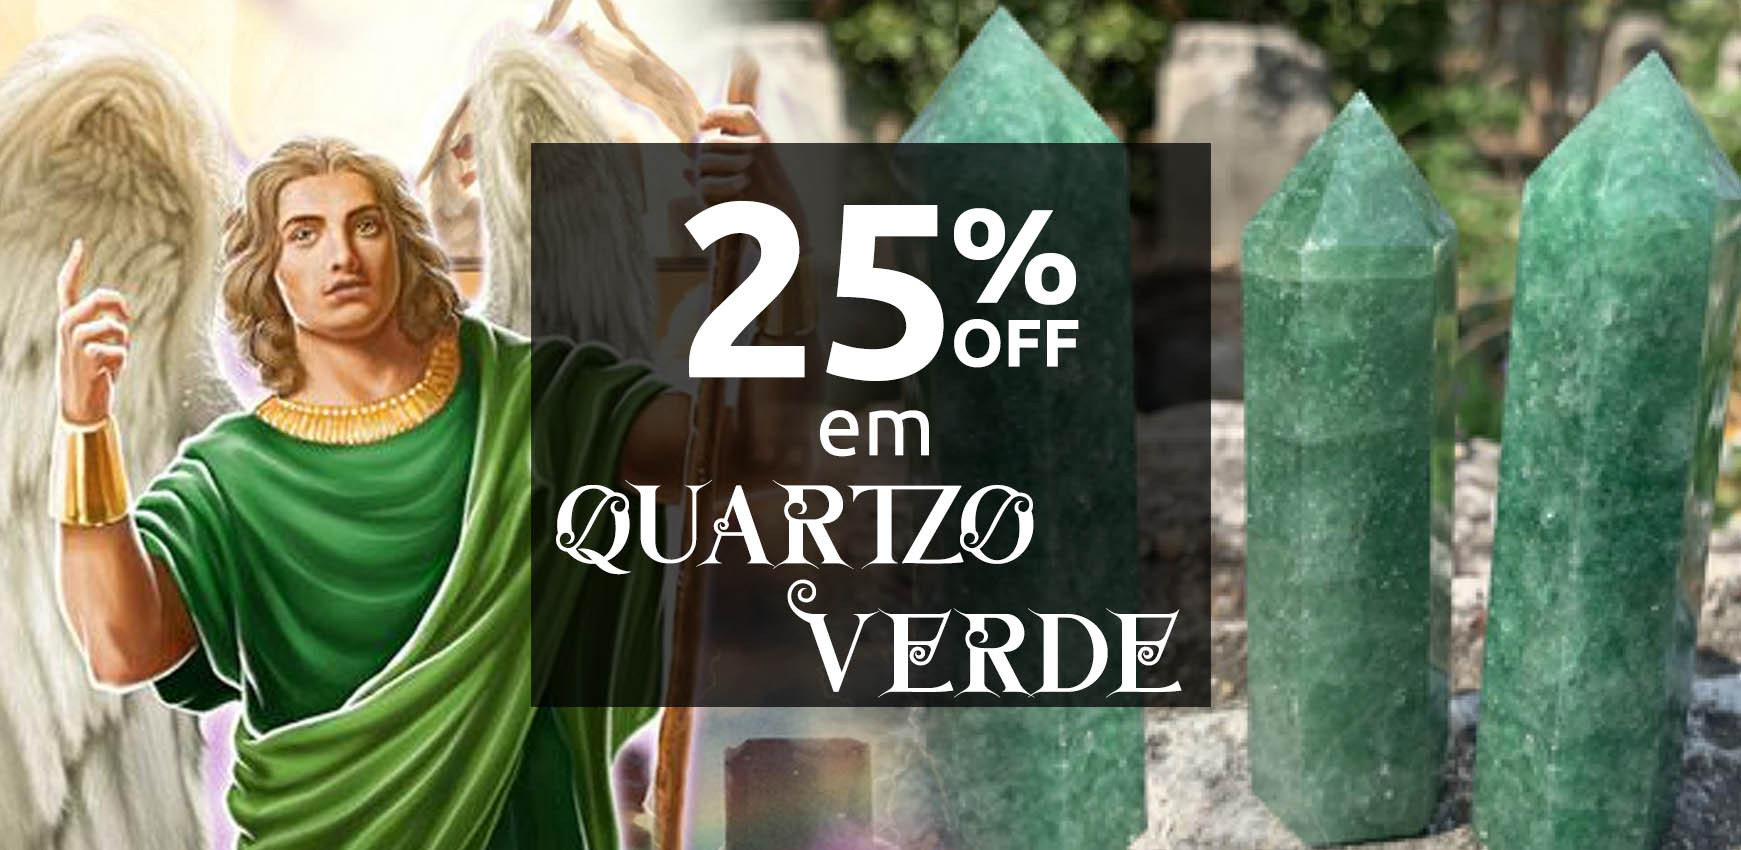 Oferta de 25% off Quartzo Verde!